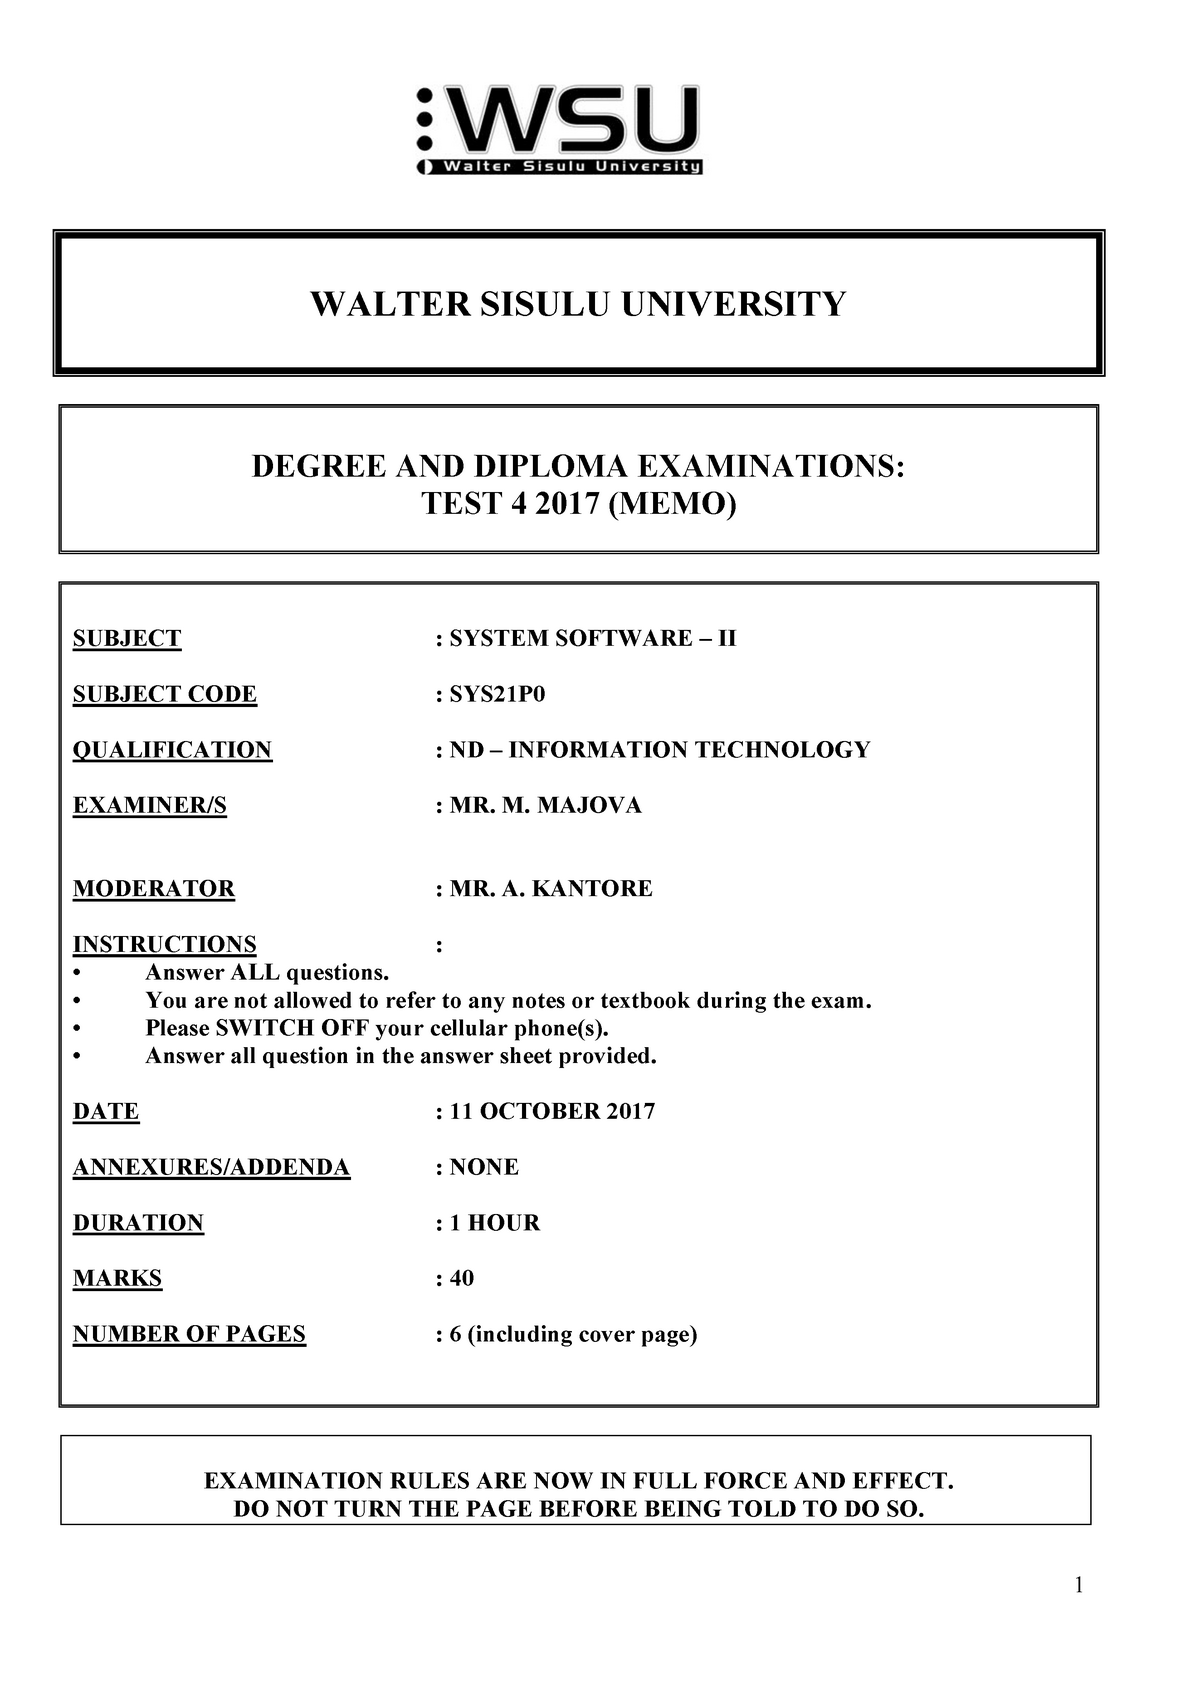 sys21p0-test4-2017-memo-walter-sisulu-university-degree-and-diploma